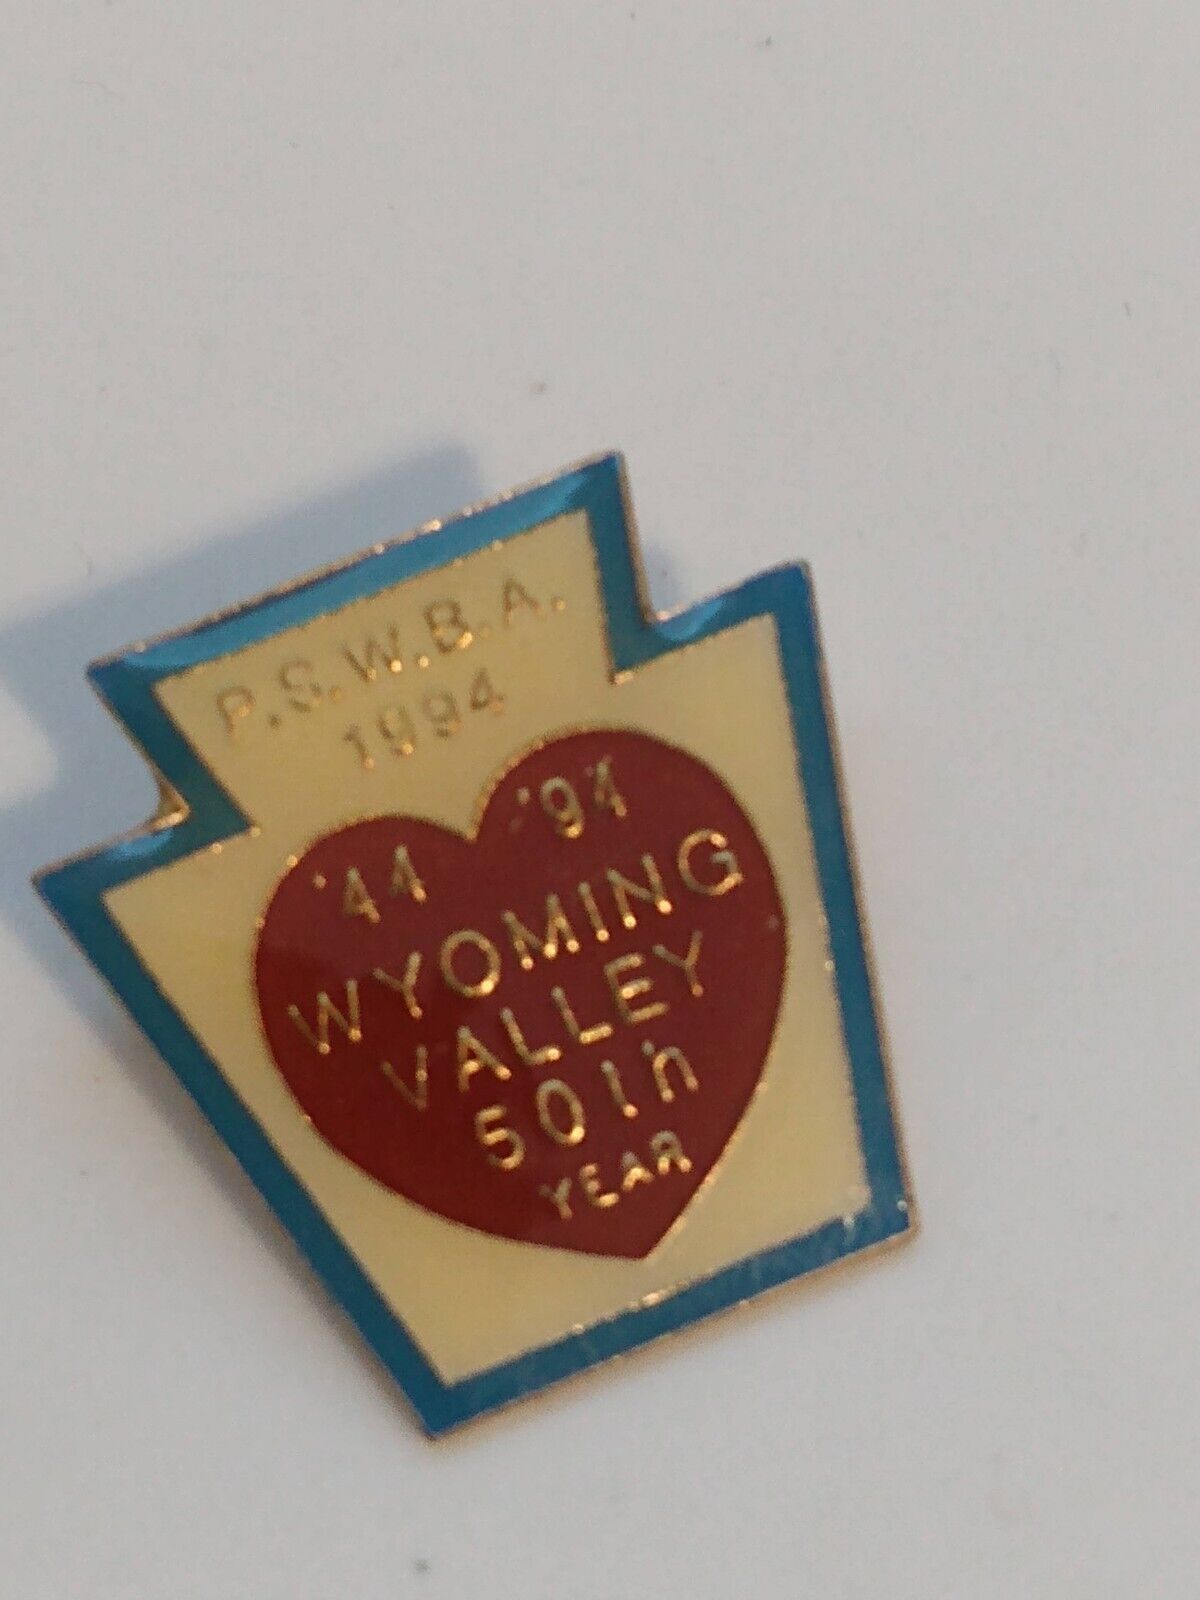 PSWBA 1994 Wyoming Valley 50th Year Lapel Pin